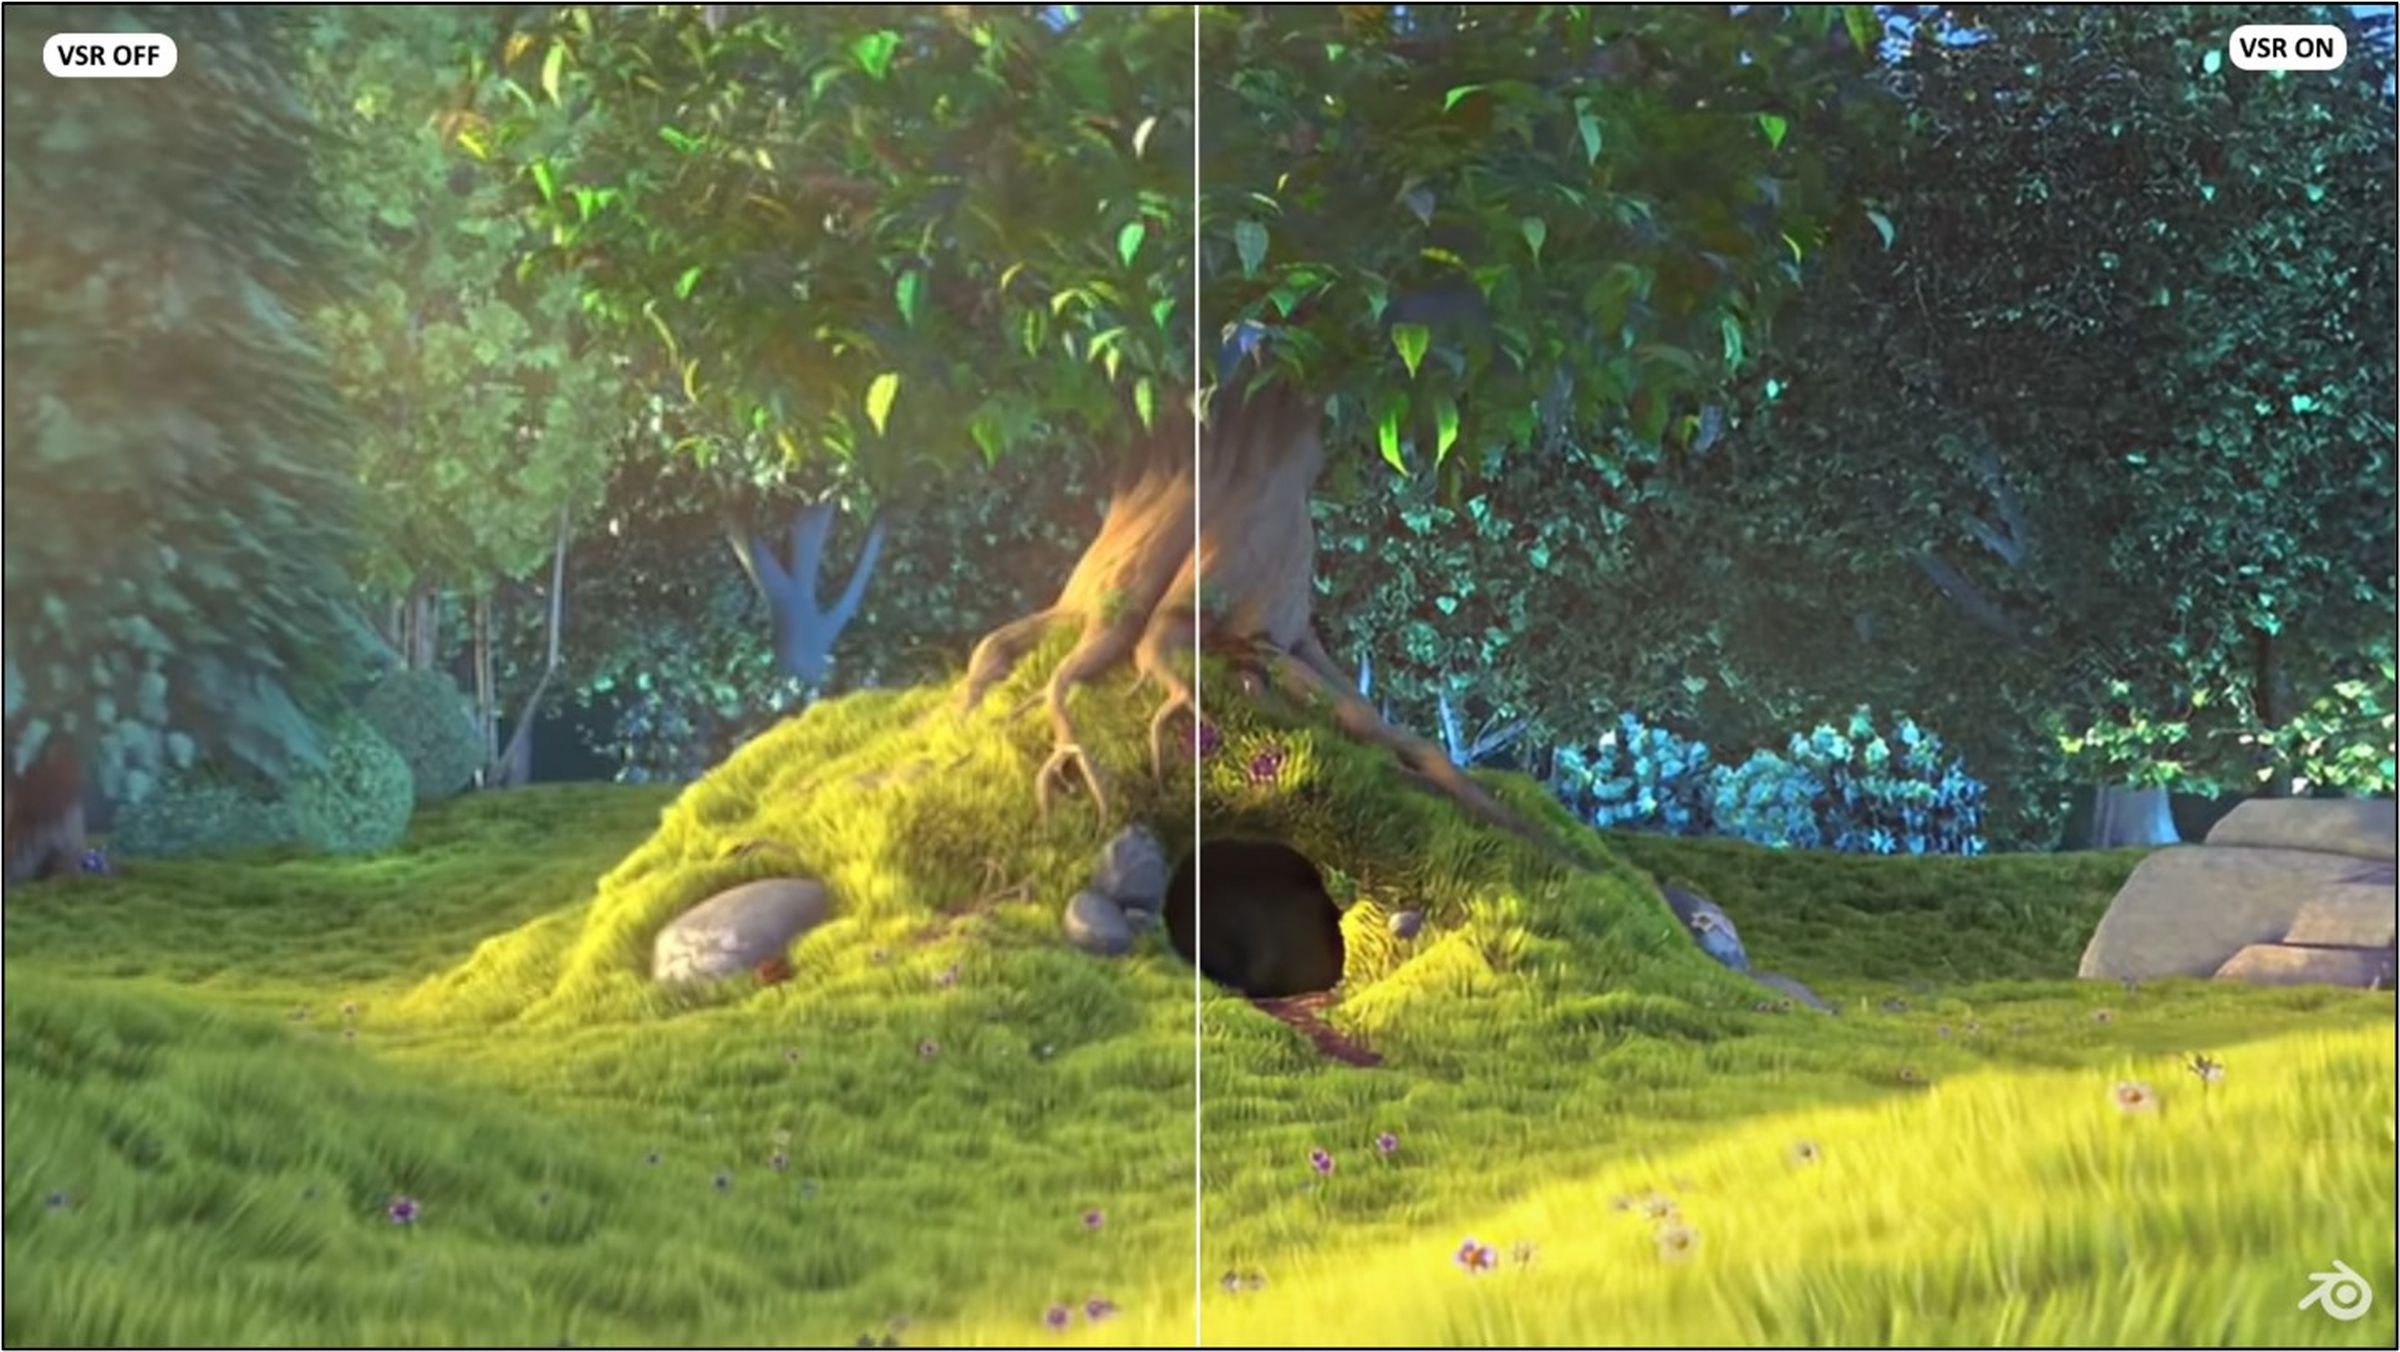 A split screen comparison of Microsoft Edge’s VSR tech improving the resolution of the Big Buck Bunny animation.